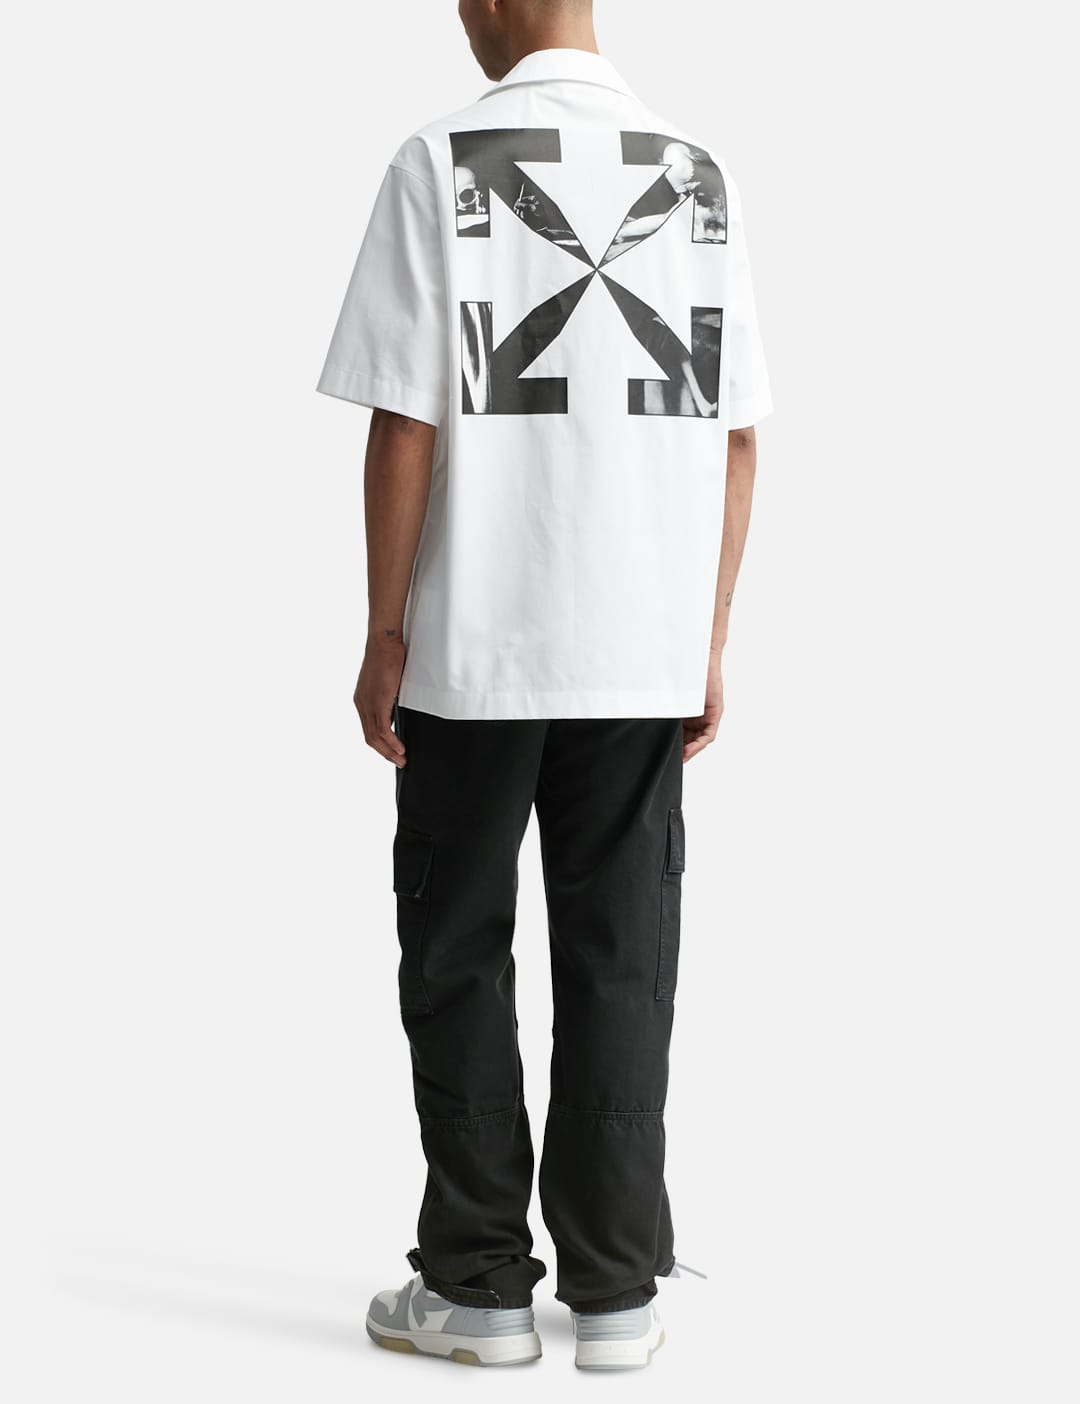 Off-White™ - Caravaggio Arrow Holiday Shirt | HBX - Globally